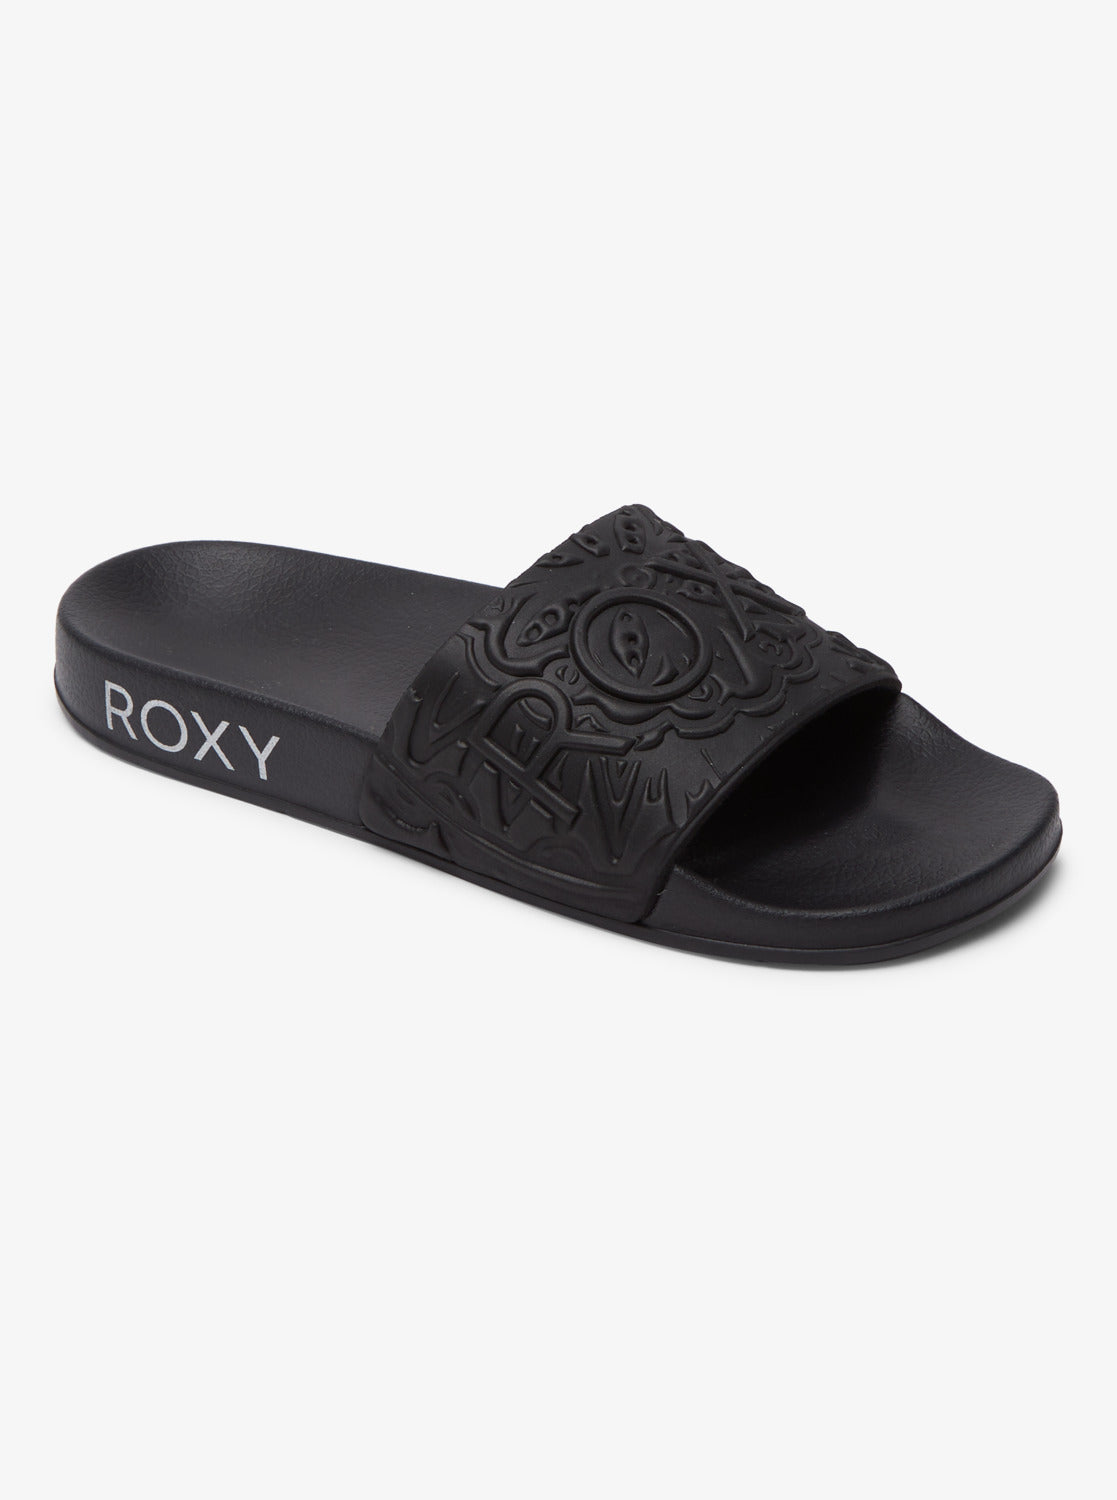 Roxy Slippy Mandala II Thong BLACK